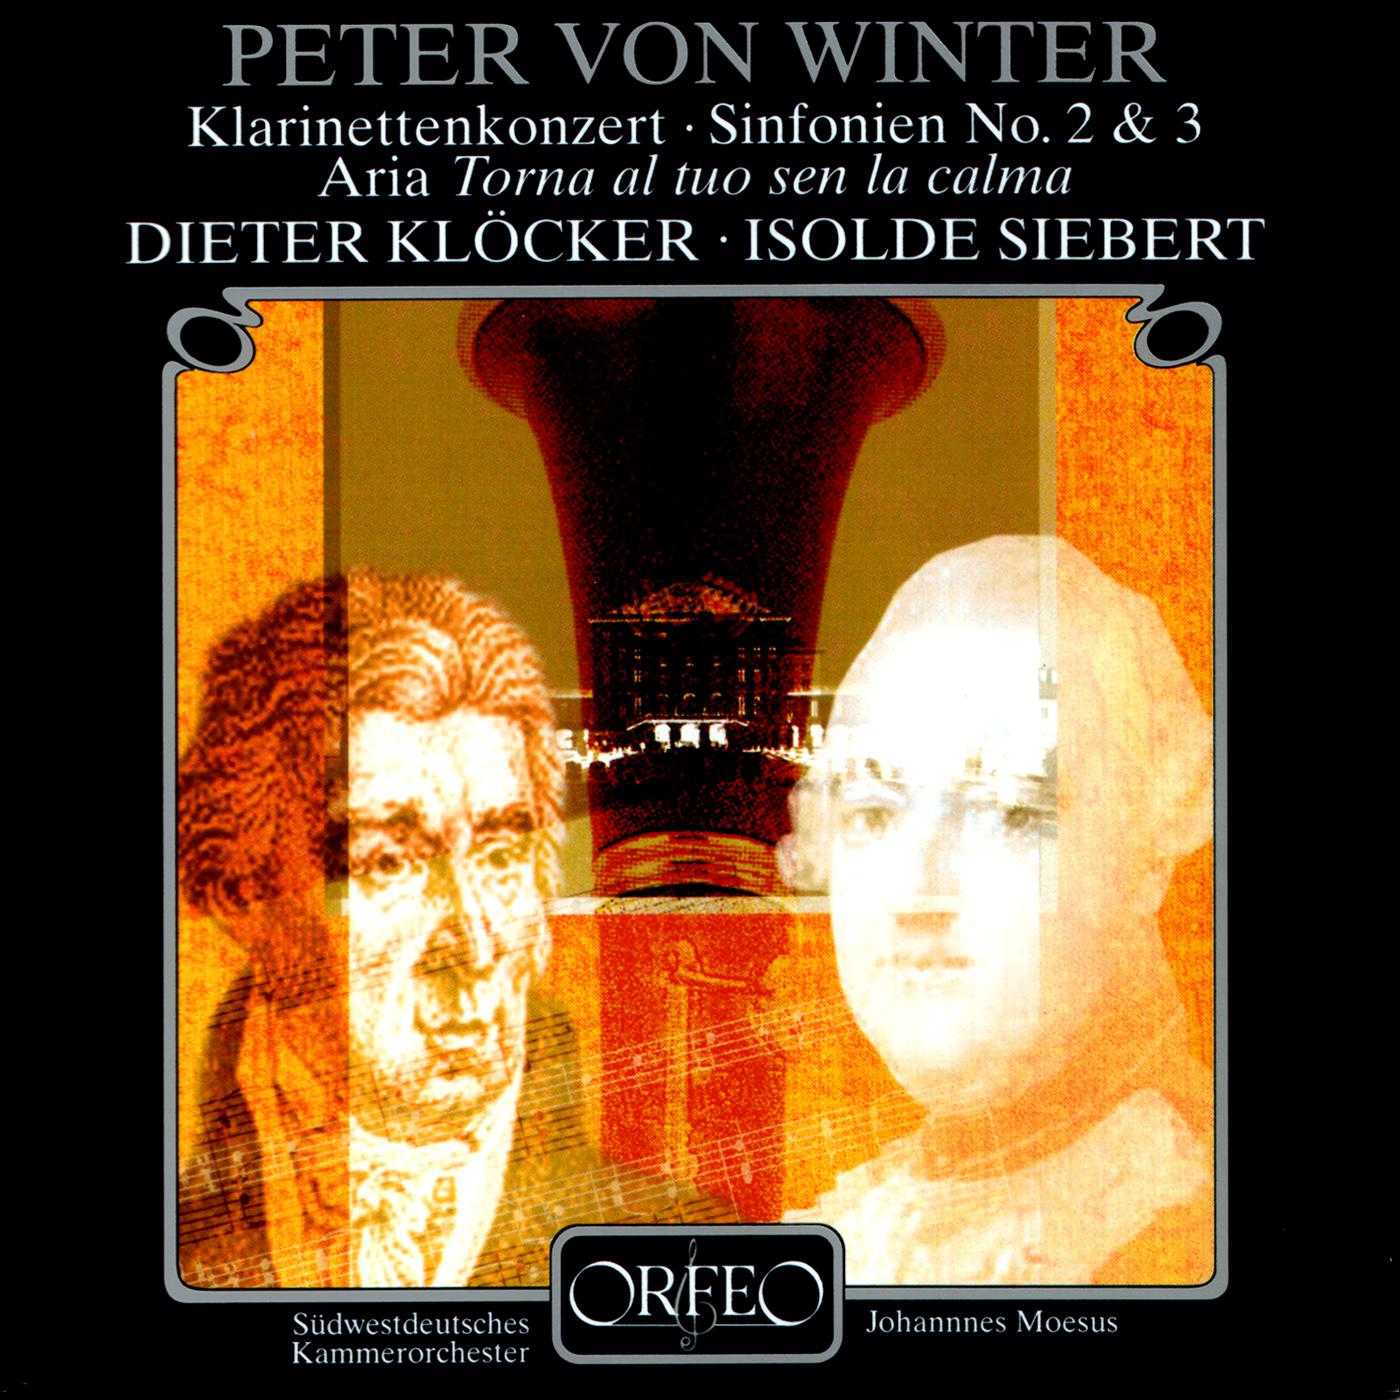 Pforzheim South West German Chamber Orchestra - Symphony No. 2 in F Major:I. Allegro assai